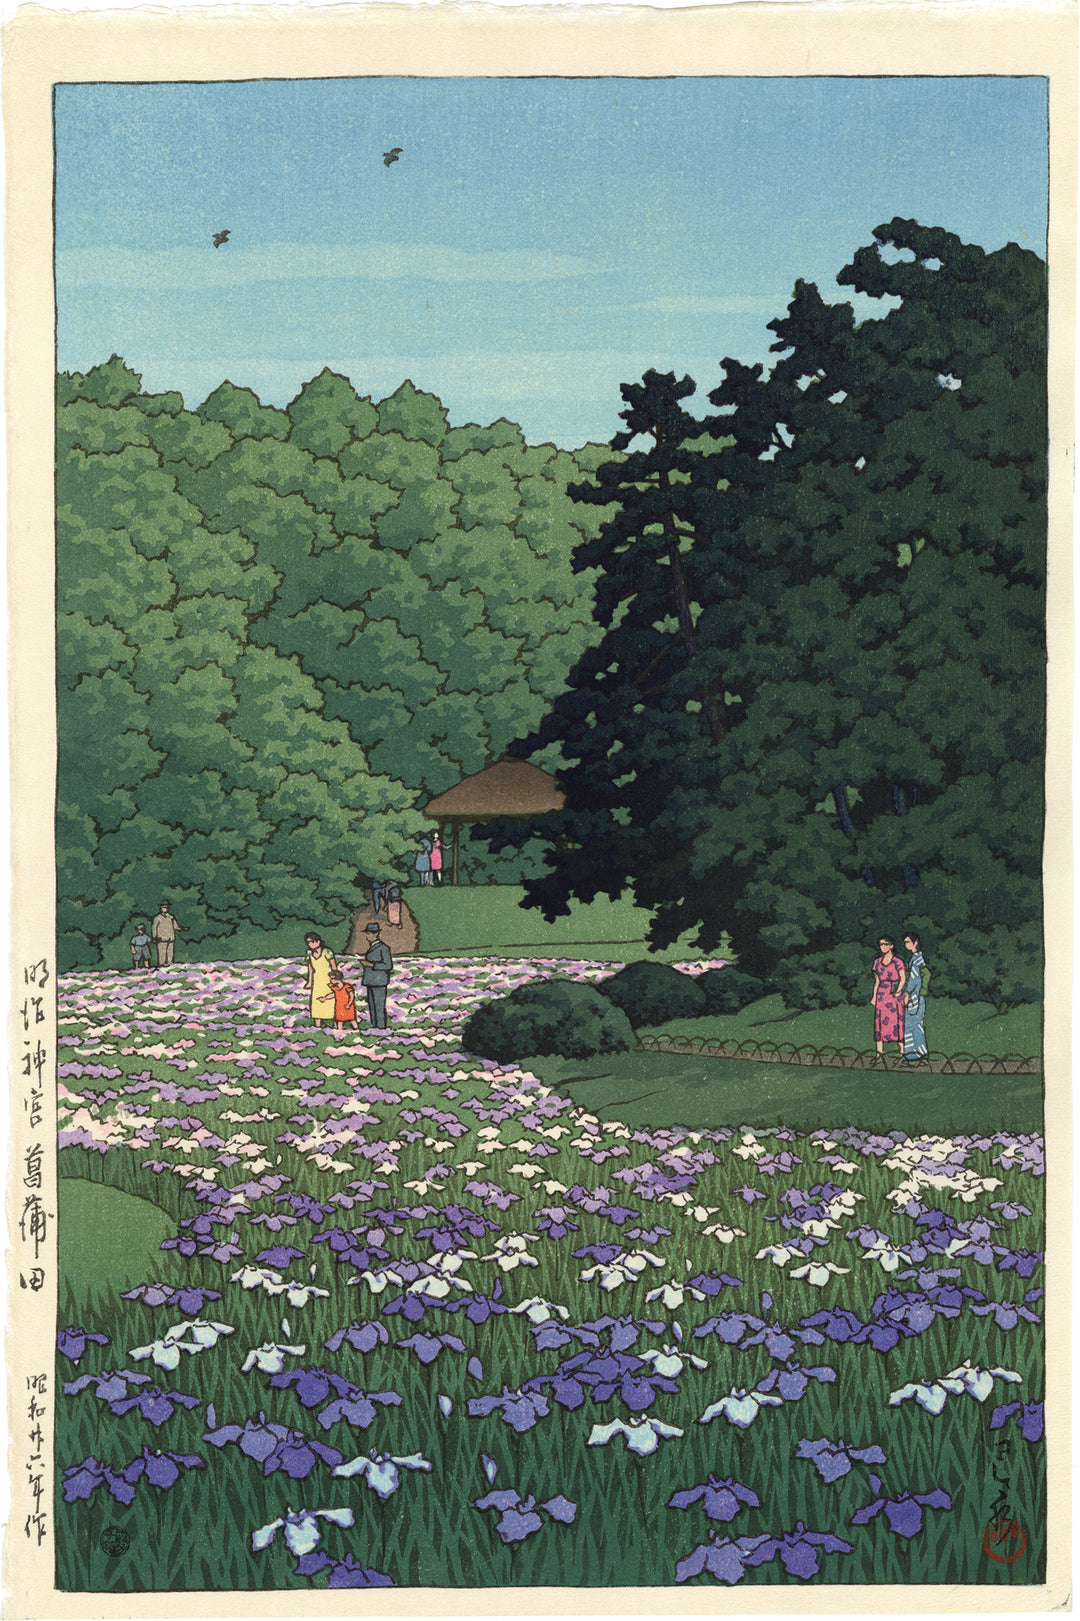 Shōbu Garden, Meiji Shrine, Tokyo by Hasui Kawase - 1951 - 38.8 x 25.8 cm private collection